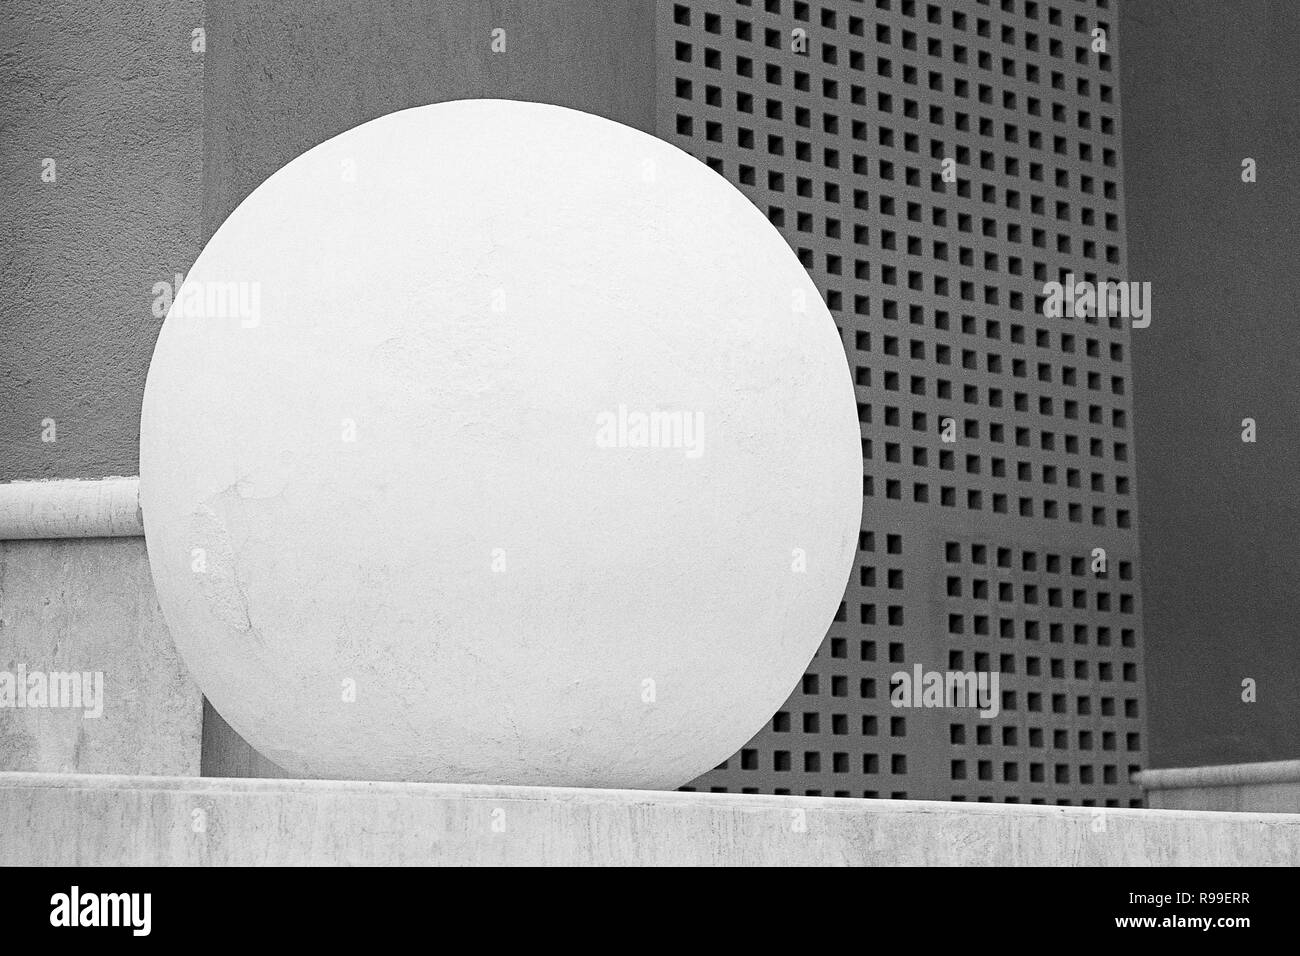 MONTERREY, NL/MEXICO - NOV 10, 2003: Sphere sculpture on the West facade of MARCO Museo de Arte Contemporaneo (Museum of Contemporary Art), Macroplaza Stock Photo